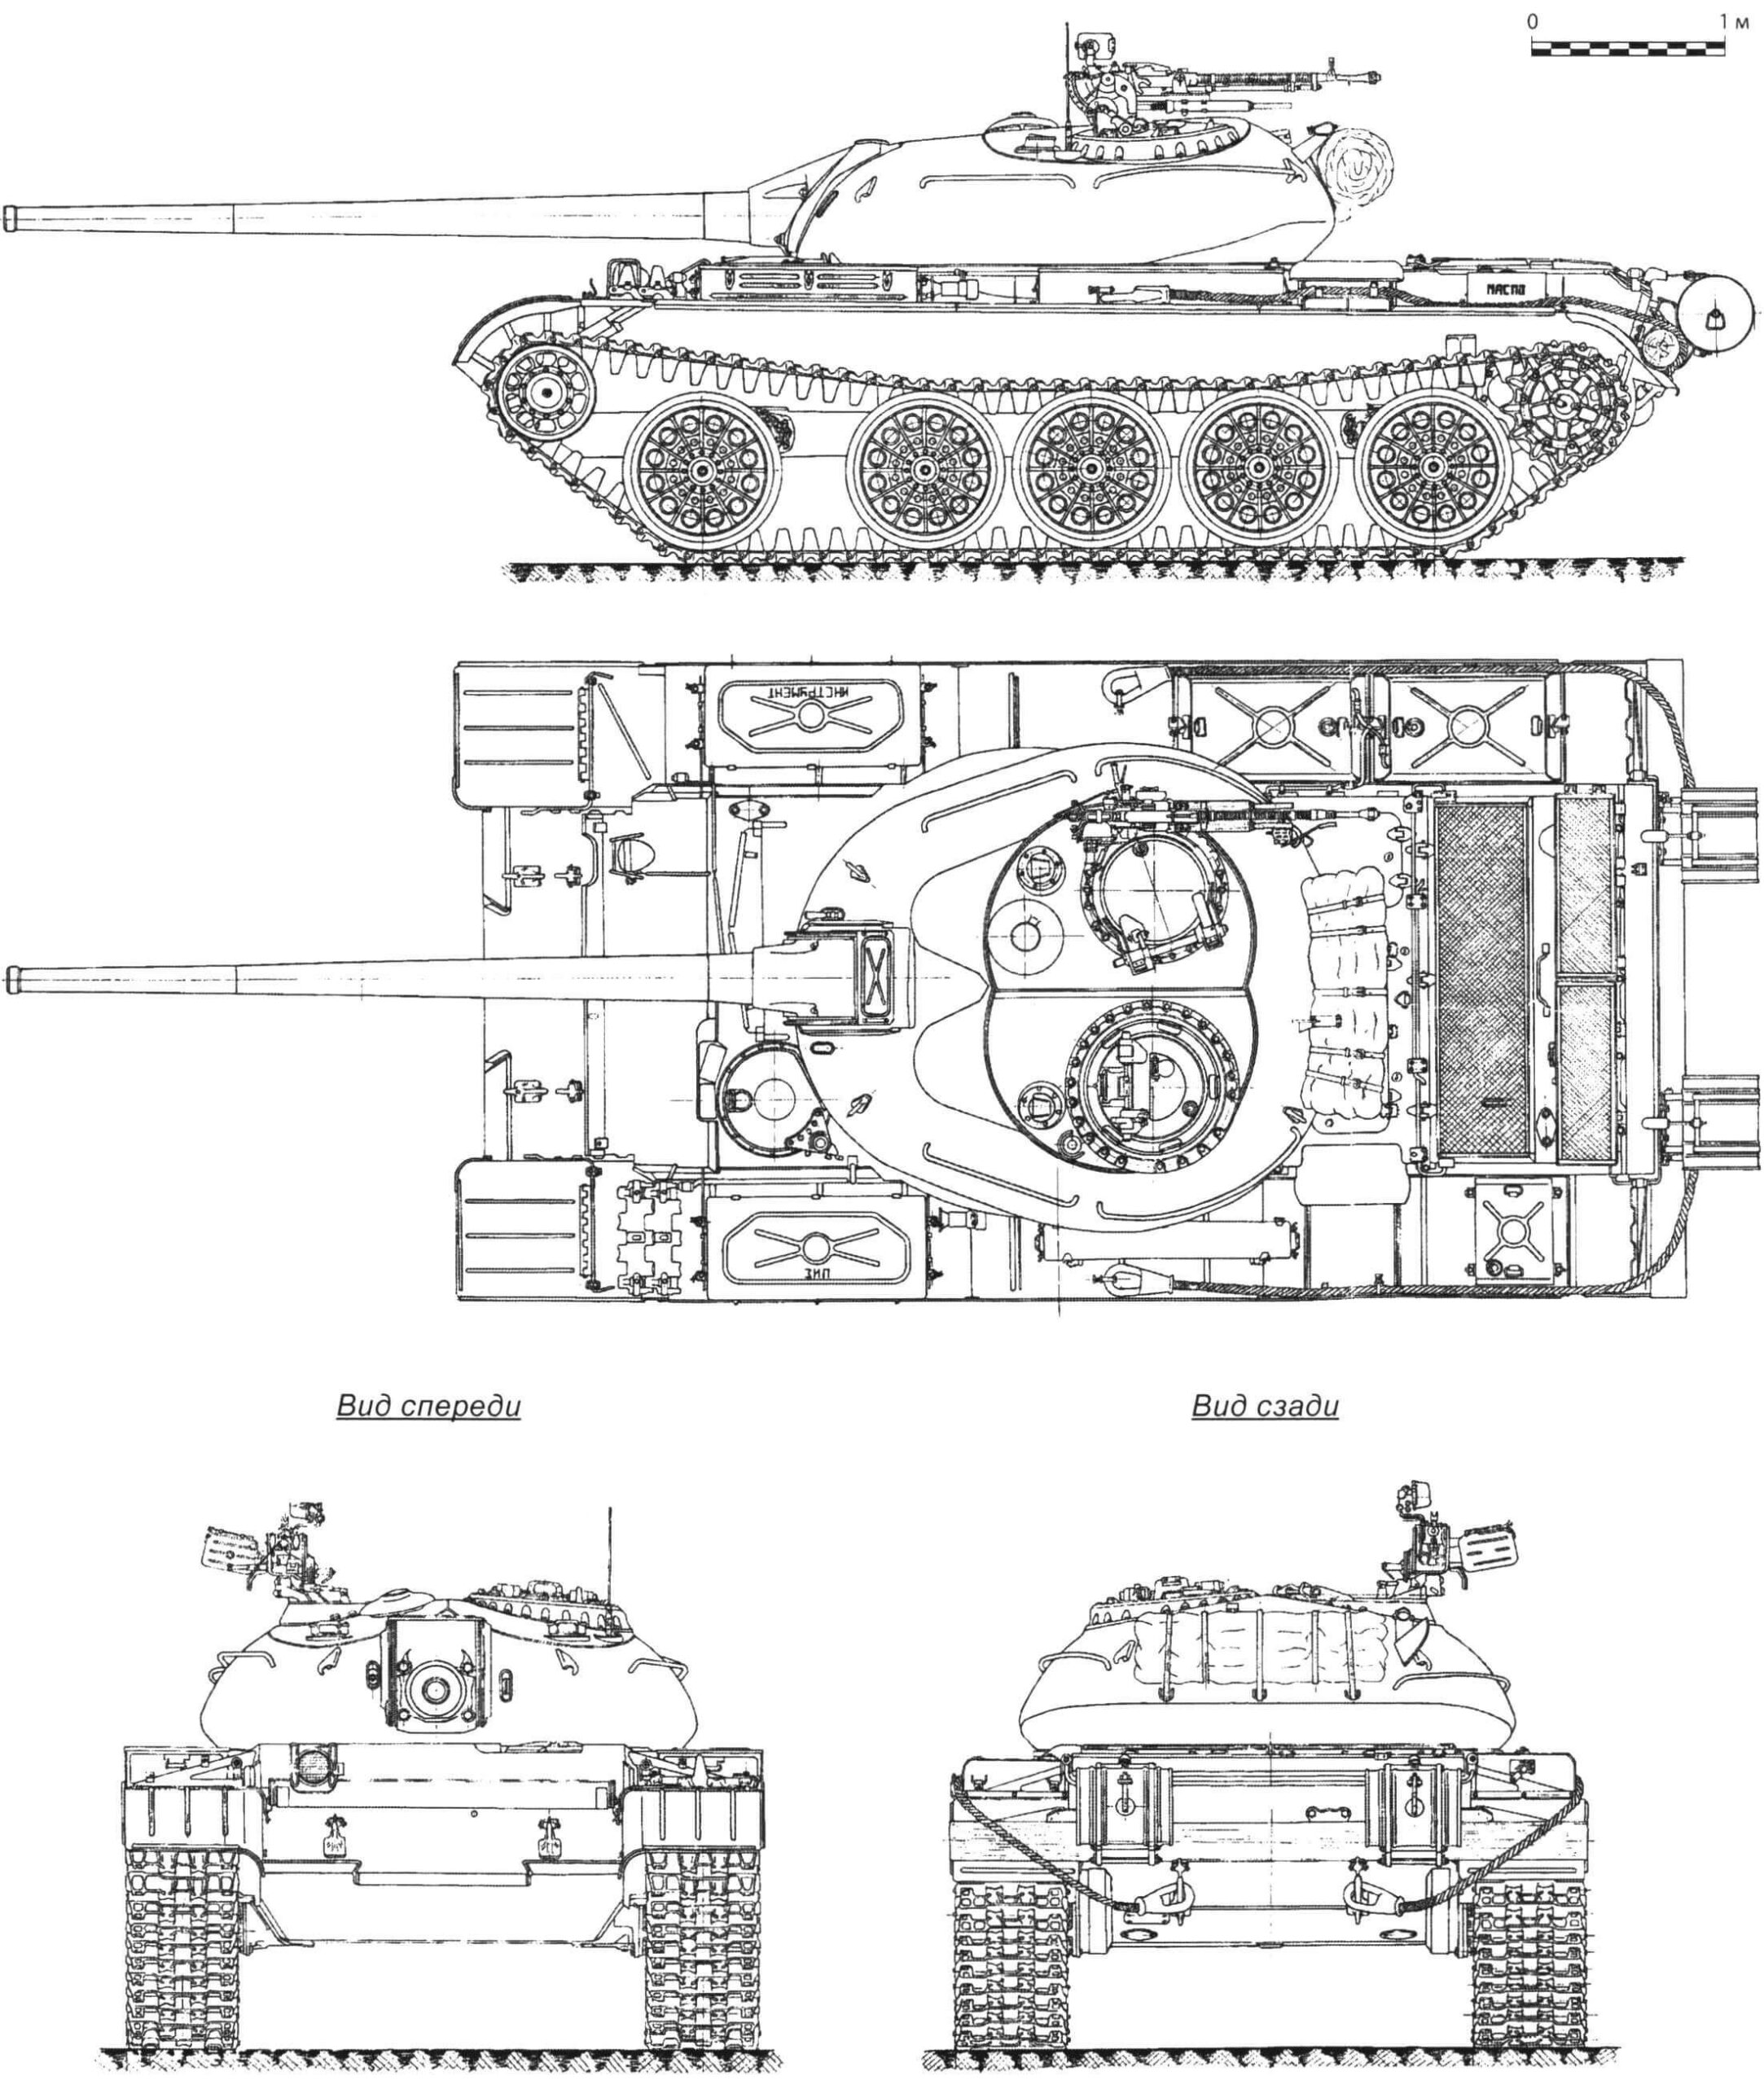 Танк Т-54 образца 1949 года